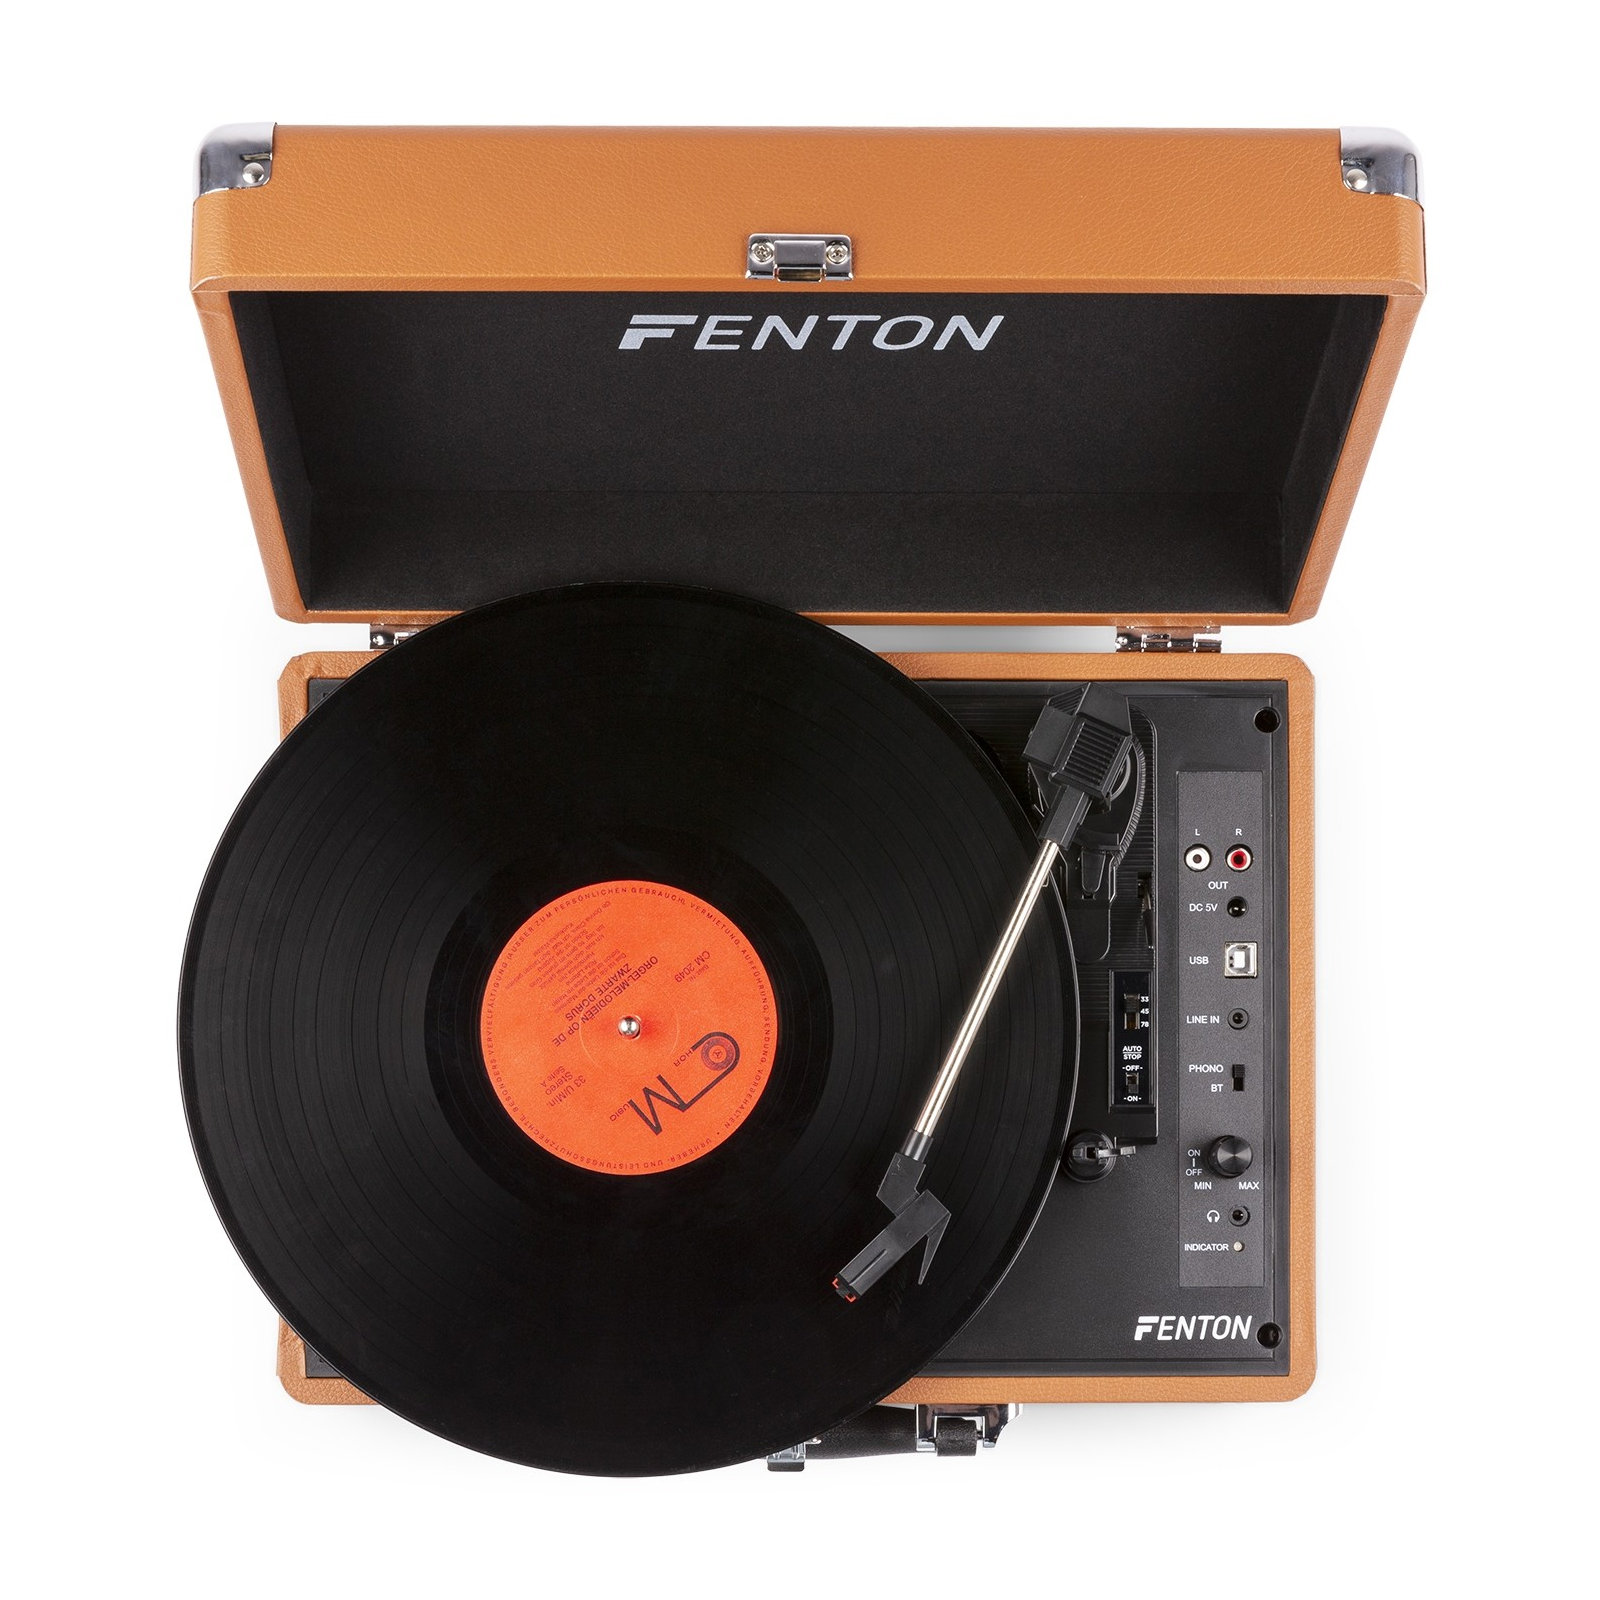 FENTON RP11F Πικάπ με ενσωμ. Ηχεία, AUX και USB Recording, Bluetooth 102.111 Βαλίτσα σε καφέ --